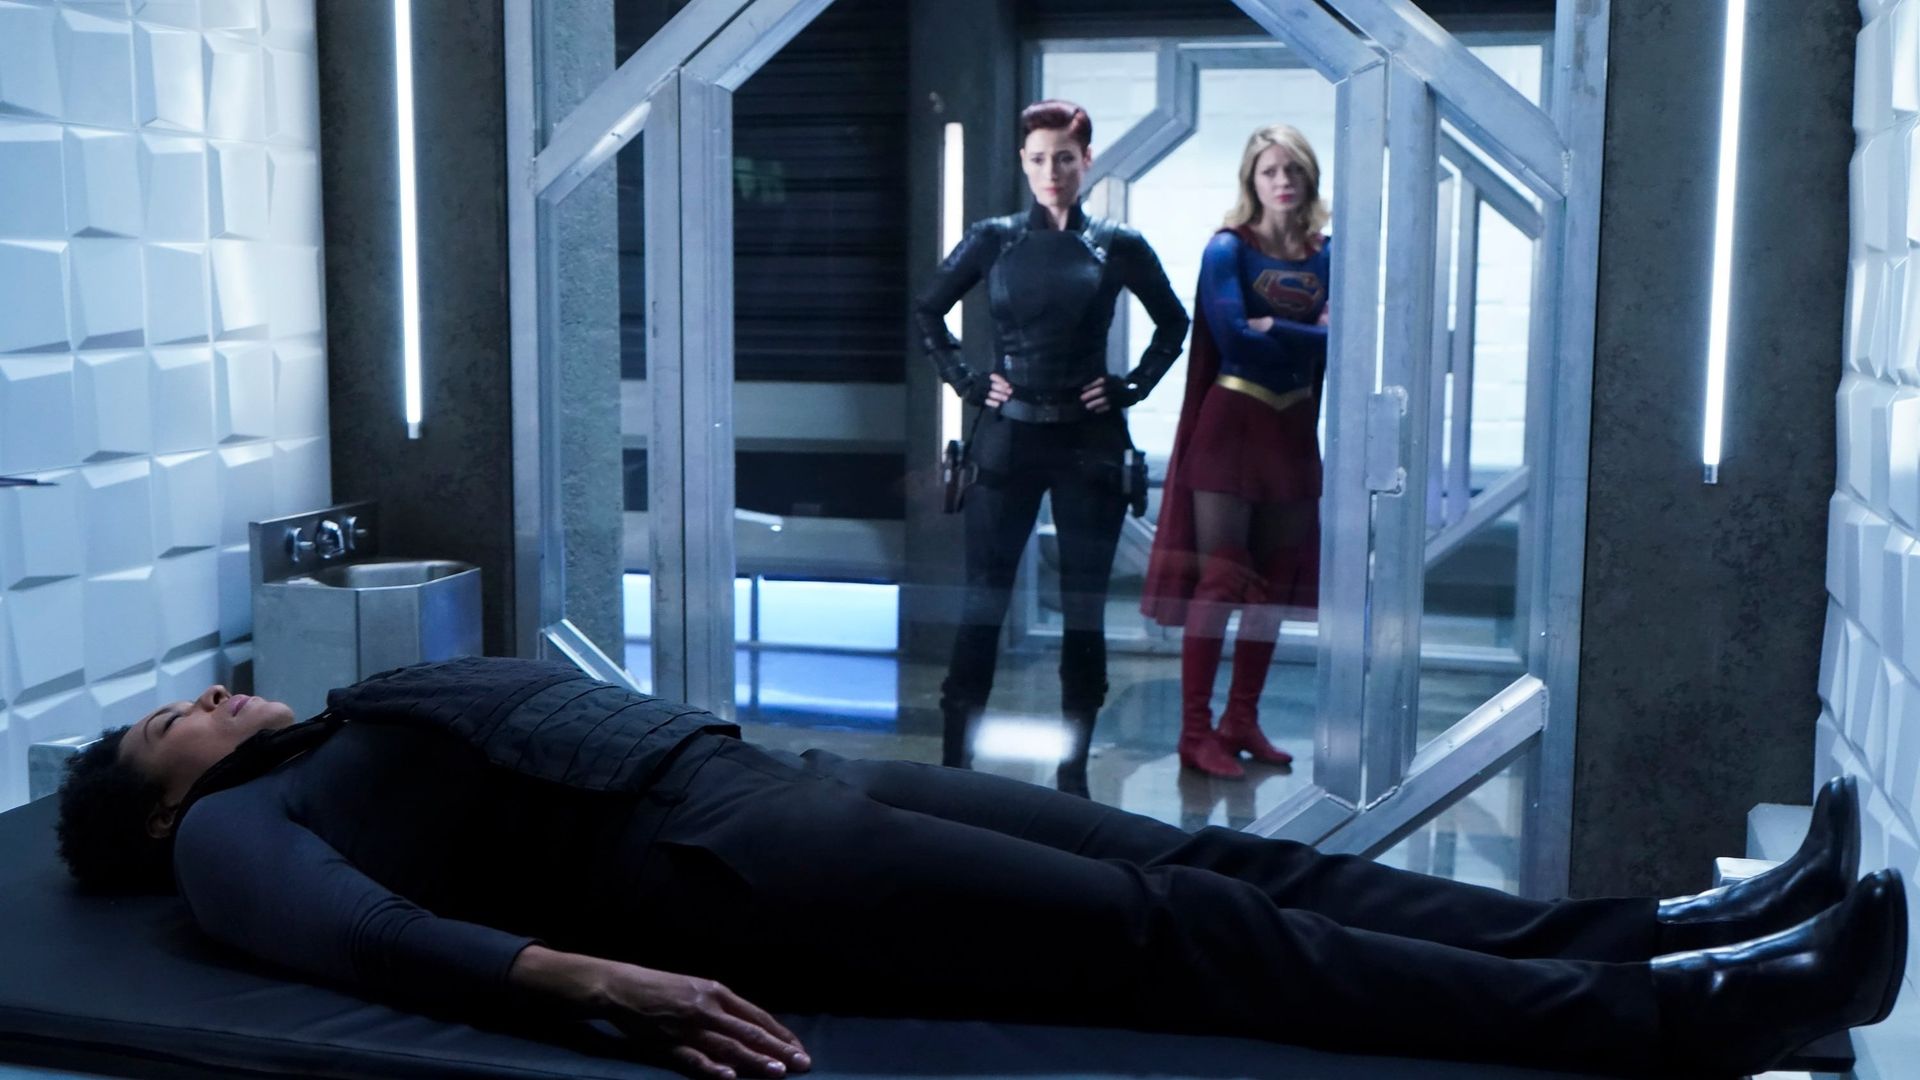 Supergirl background